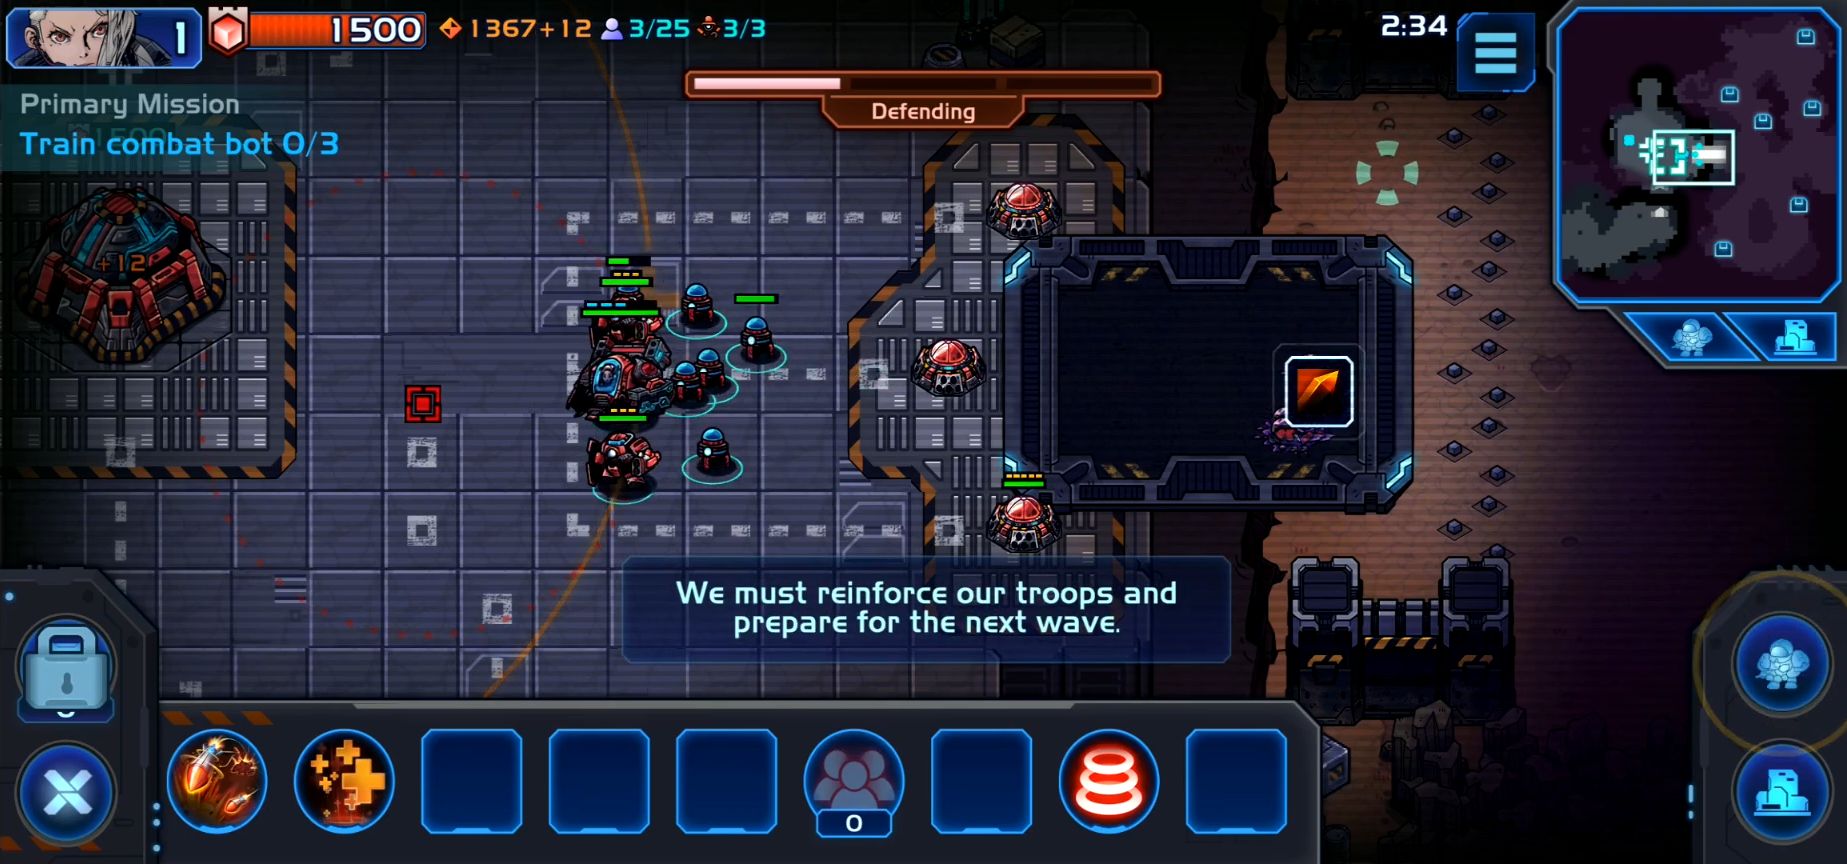 Xeno Command - Android game screenshots.